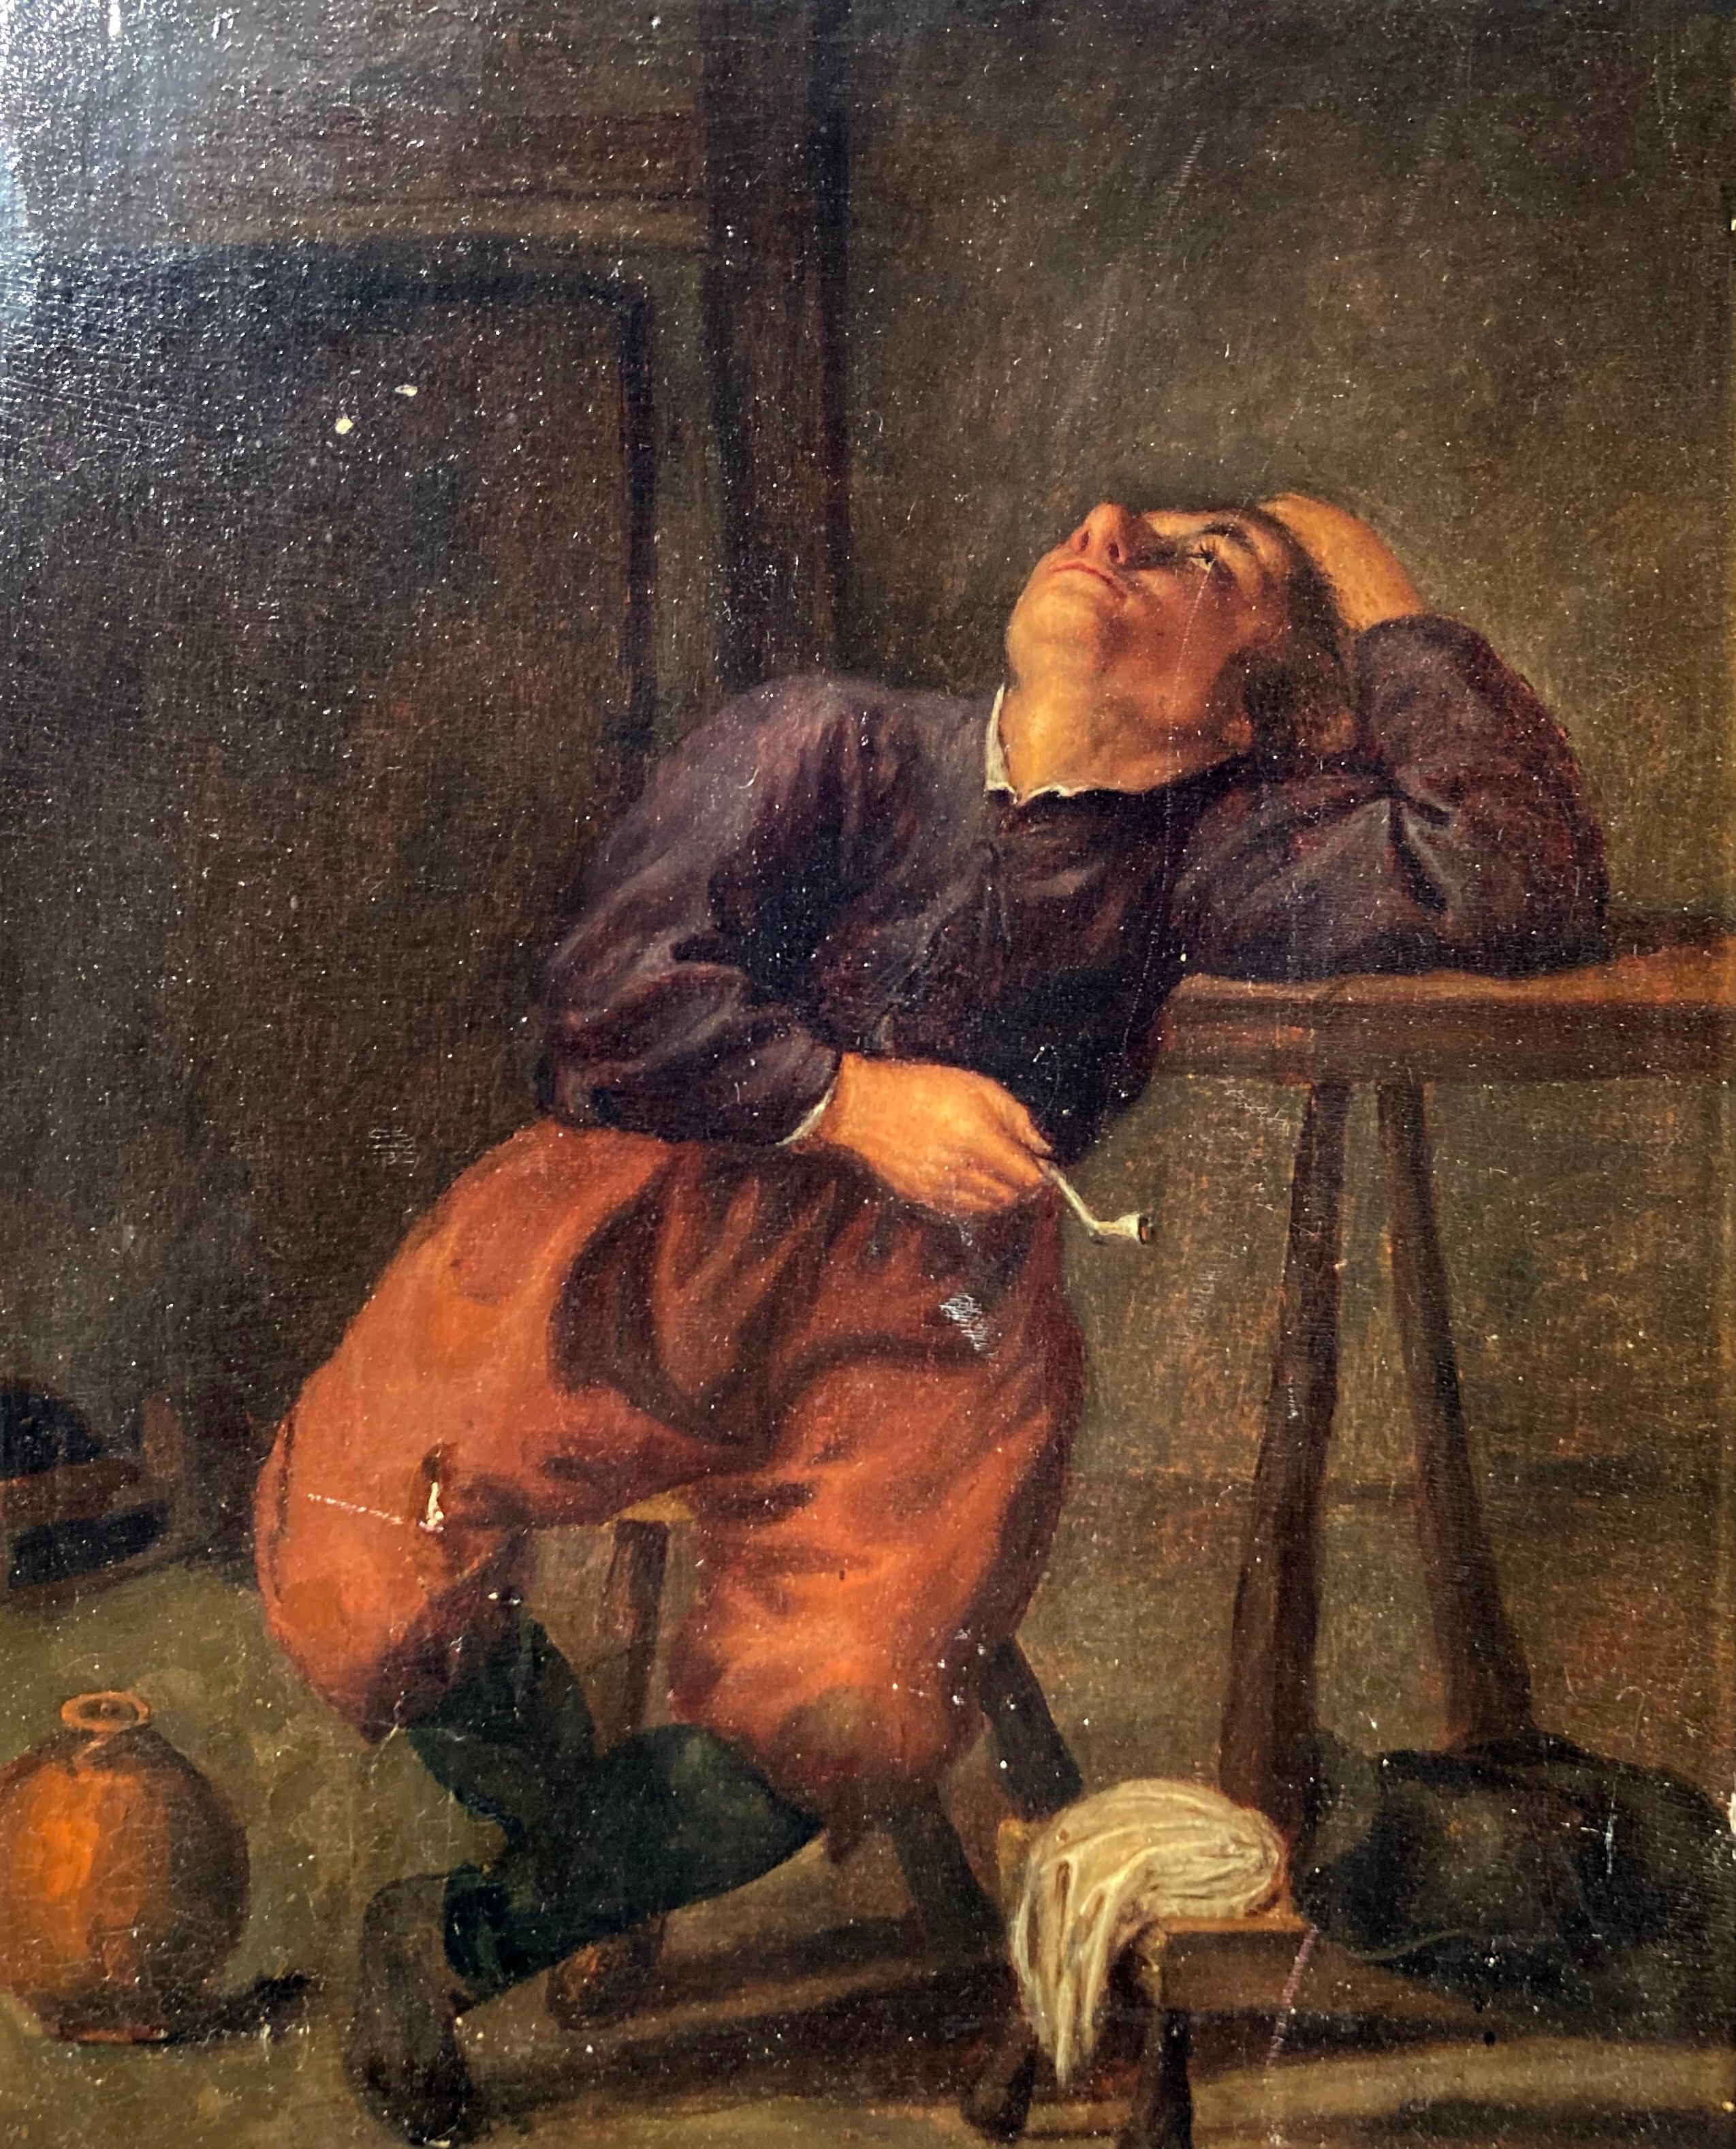 Follower of Boel, Pipe Smoking Man in an Inn, Dutch Golden Age, Old Master - Painting by Pieter Boel